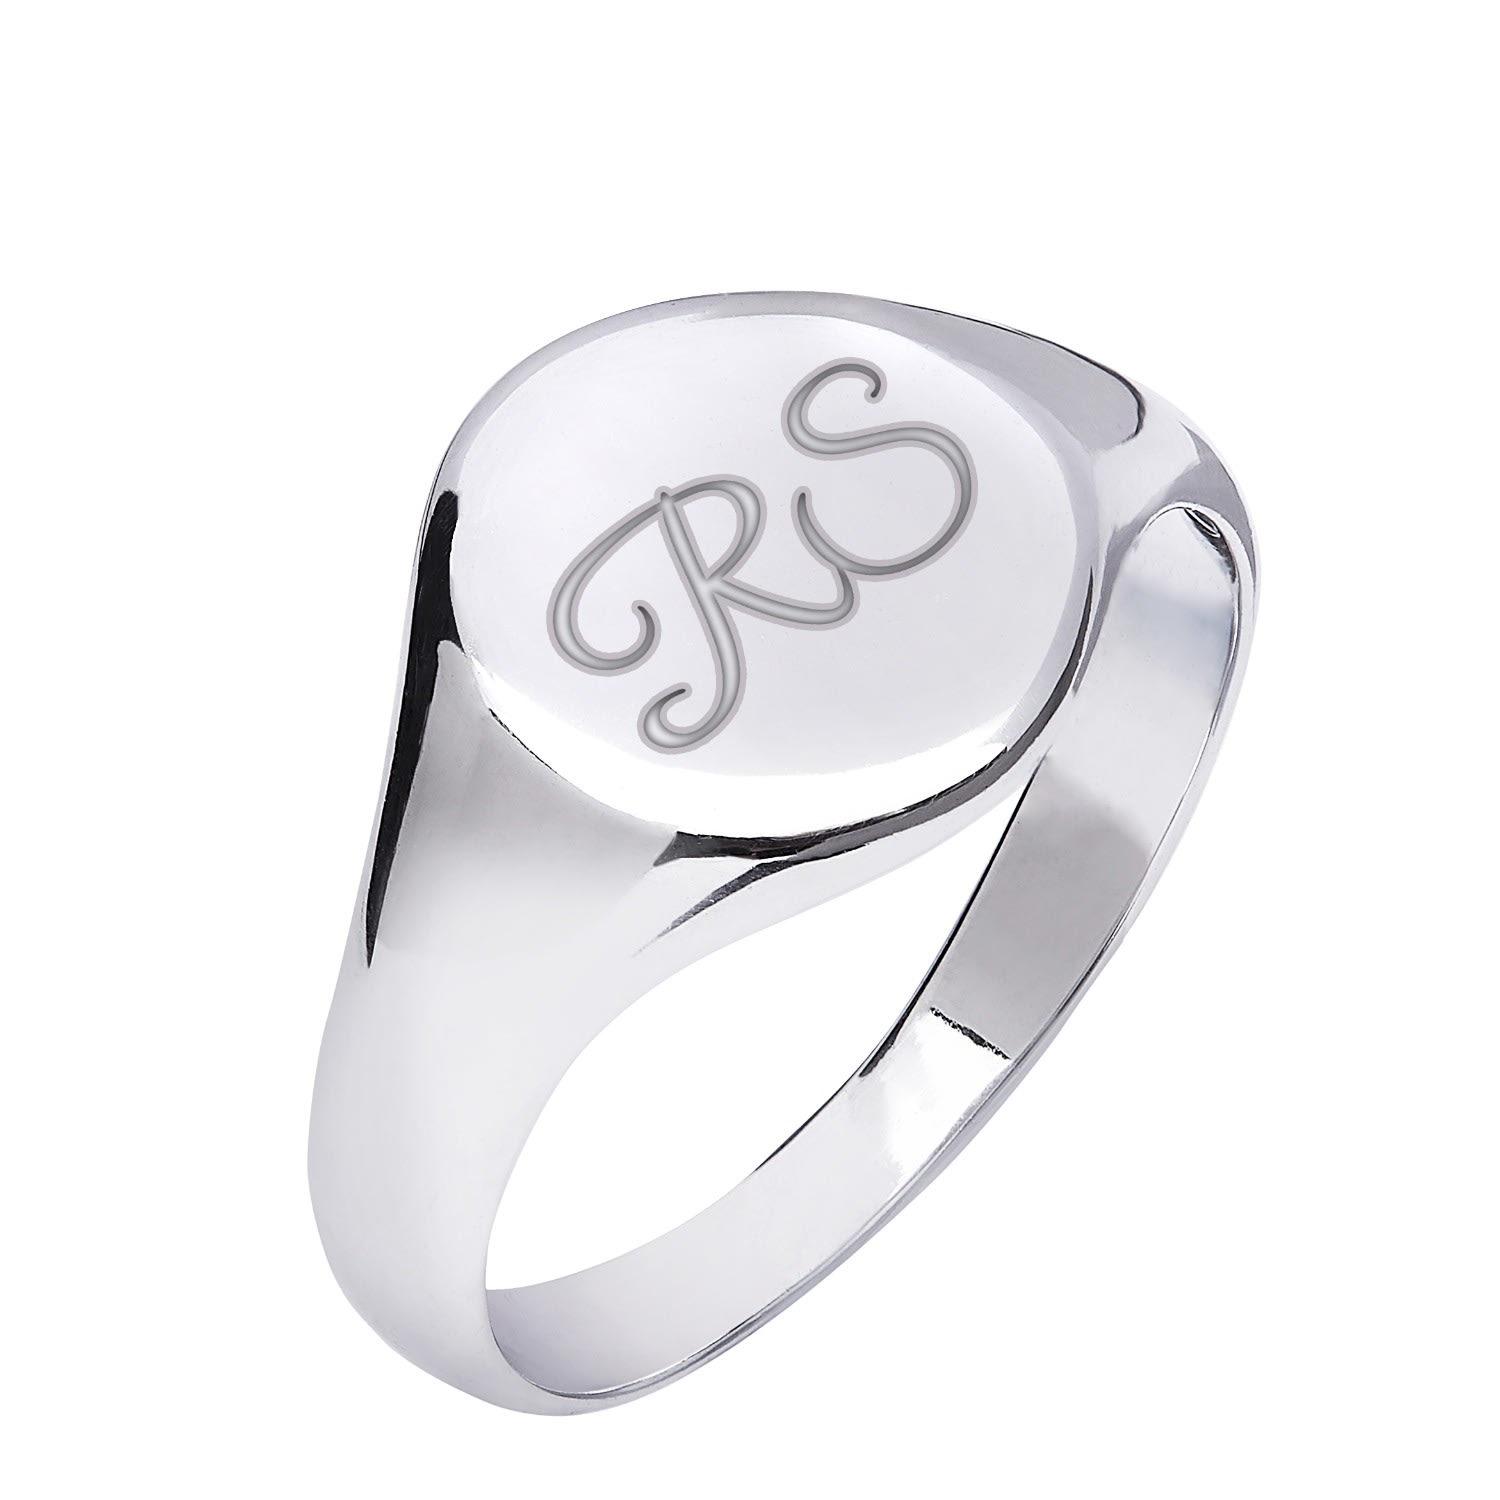 Kaizarin Silver Initial Signet Ring For Men Or Women - Size R In Metallic